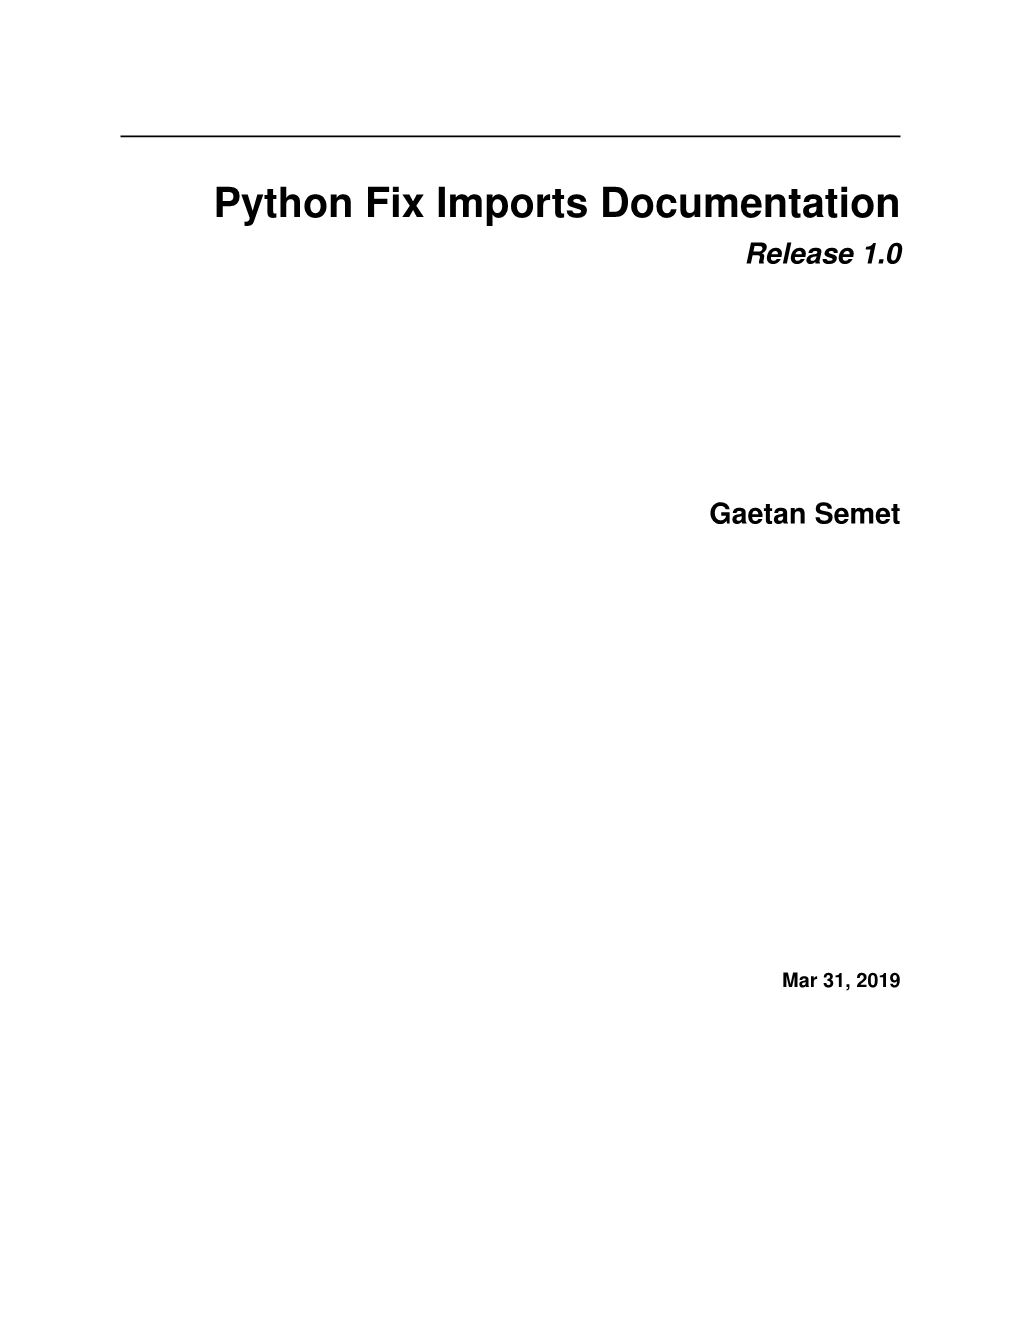 Python Fix Imports Documentation Release 1.0